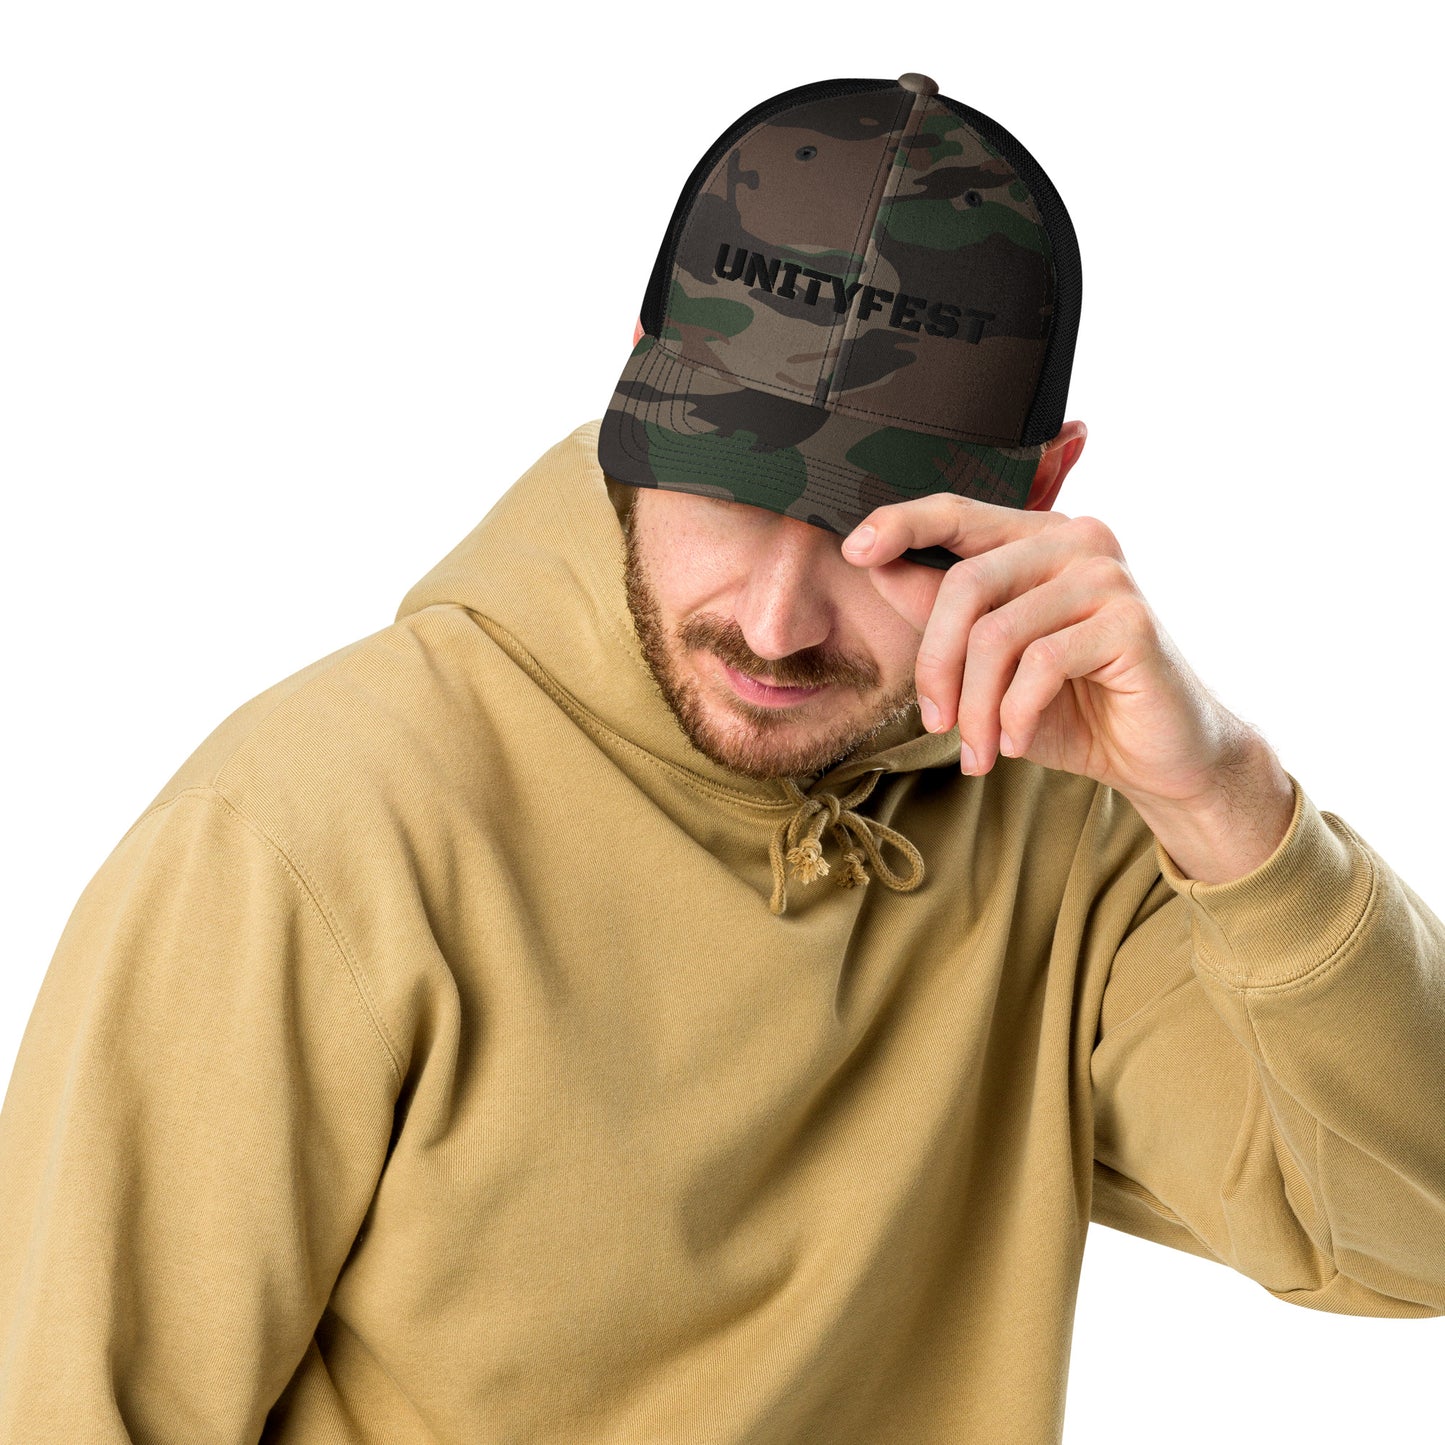 Unityfest Camouflage trucker hat